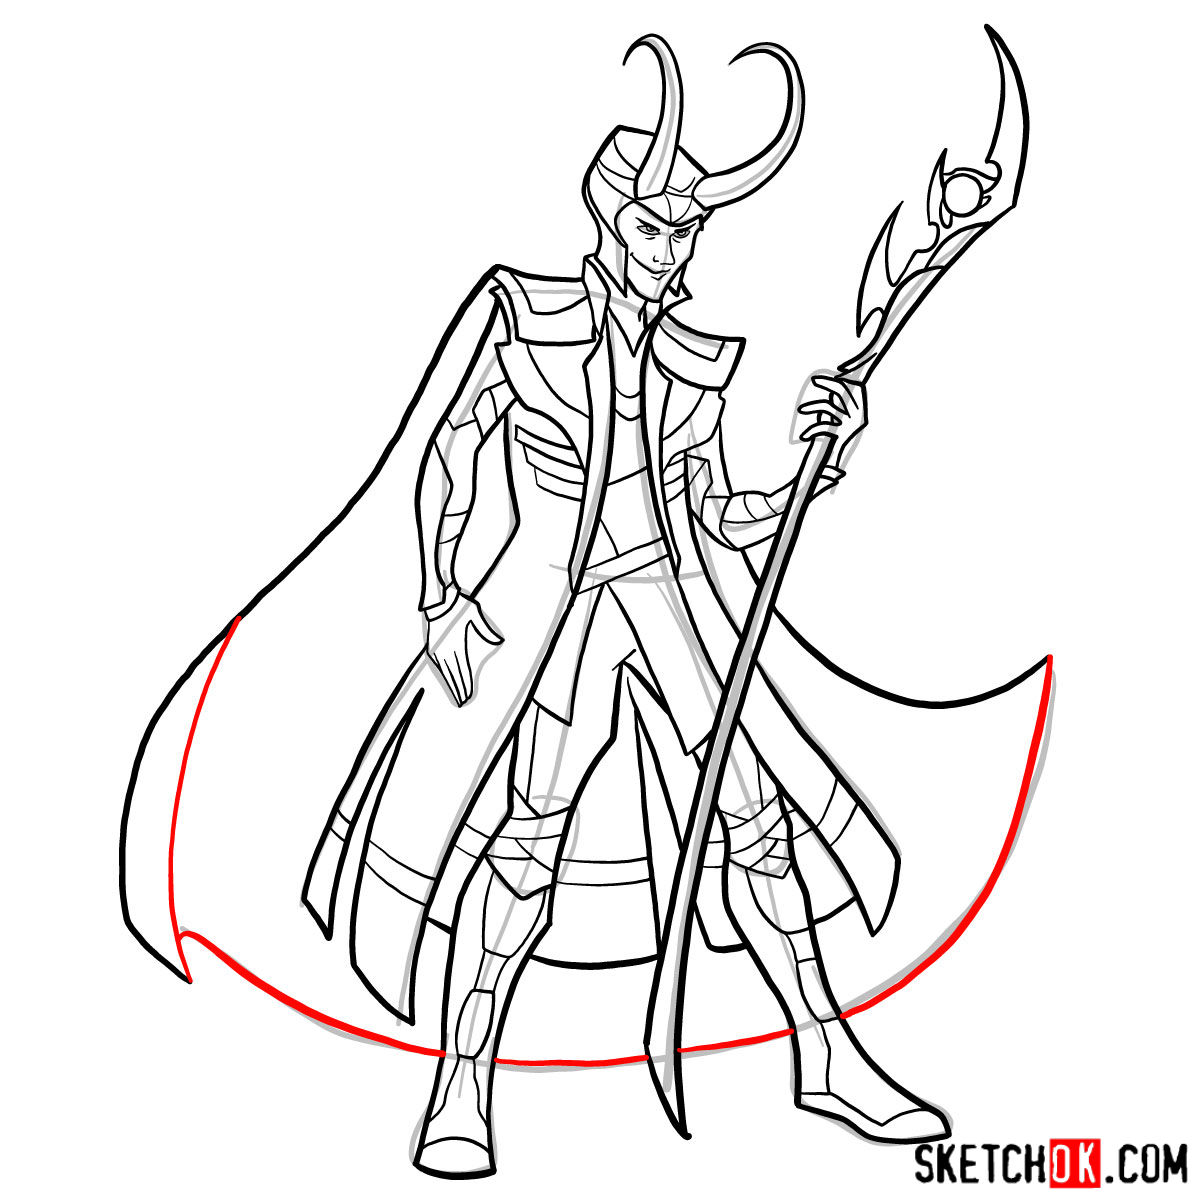 How to draw Loki - Marvel Comics villian - step 19